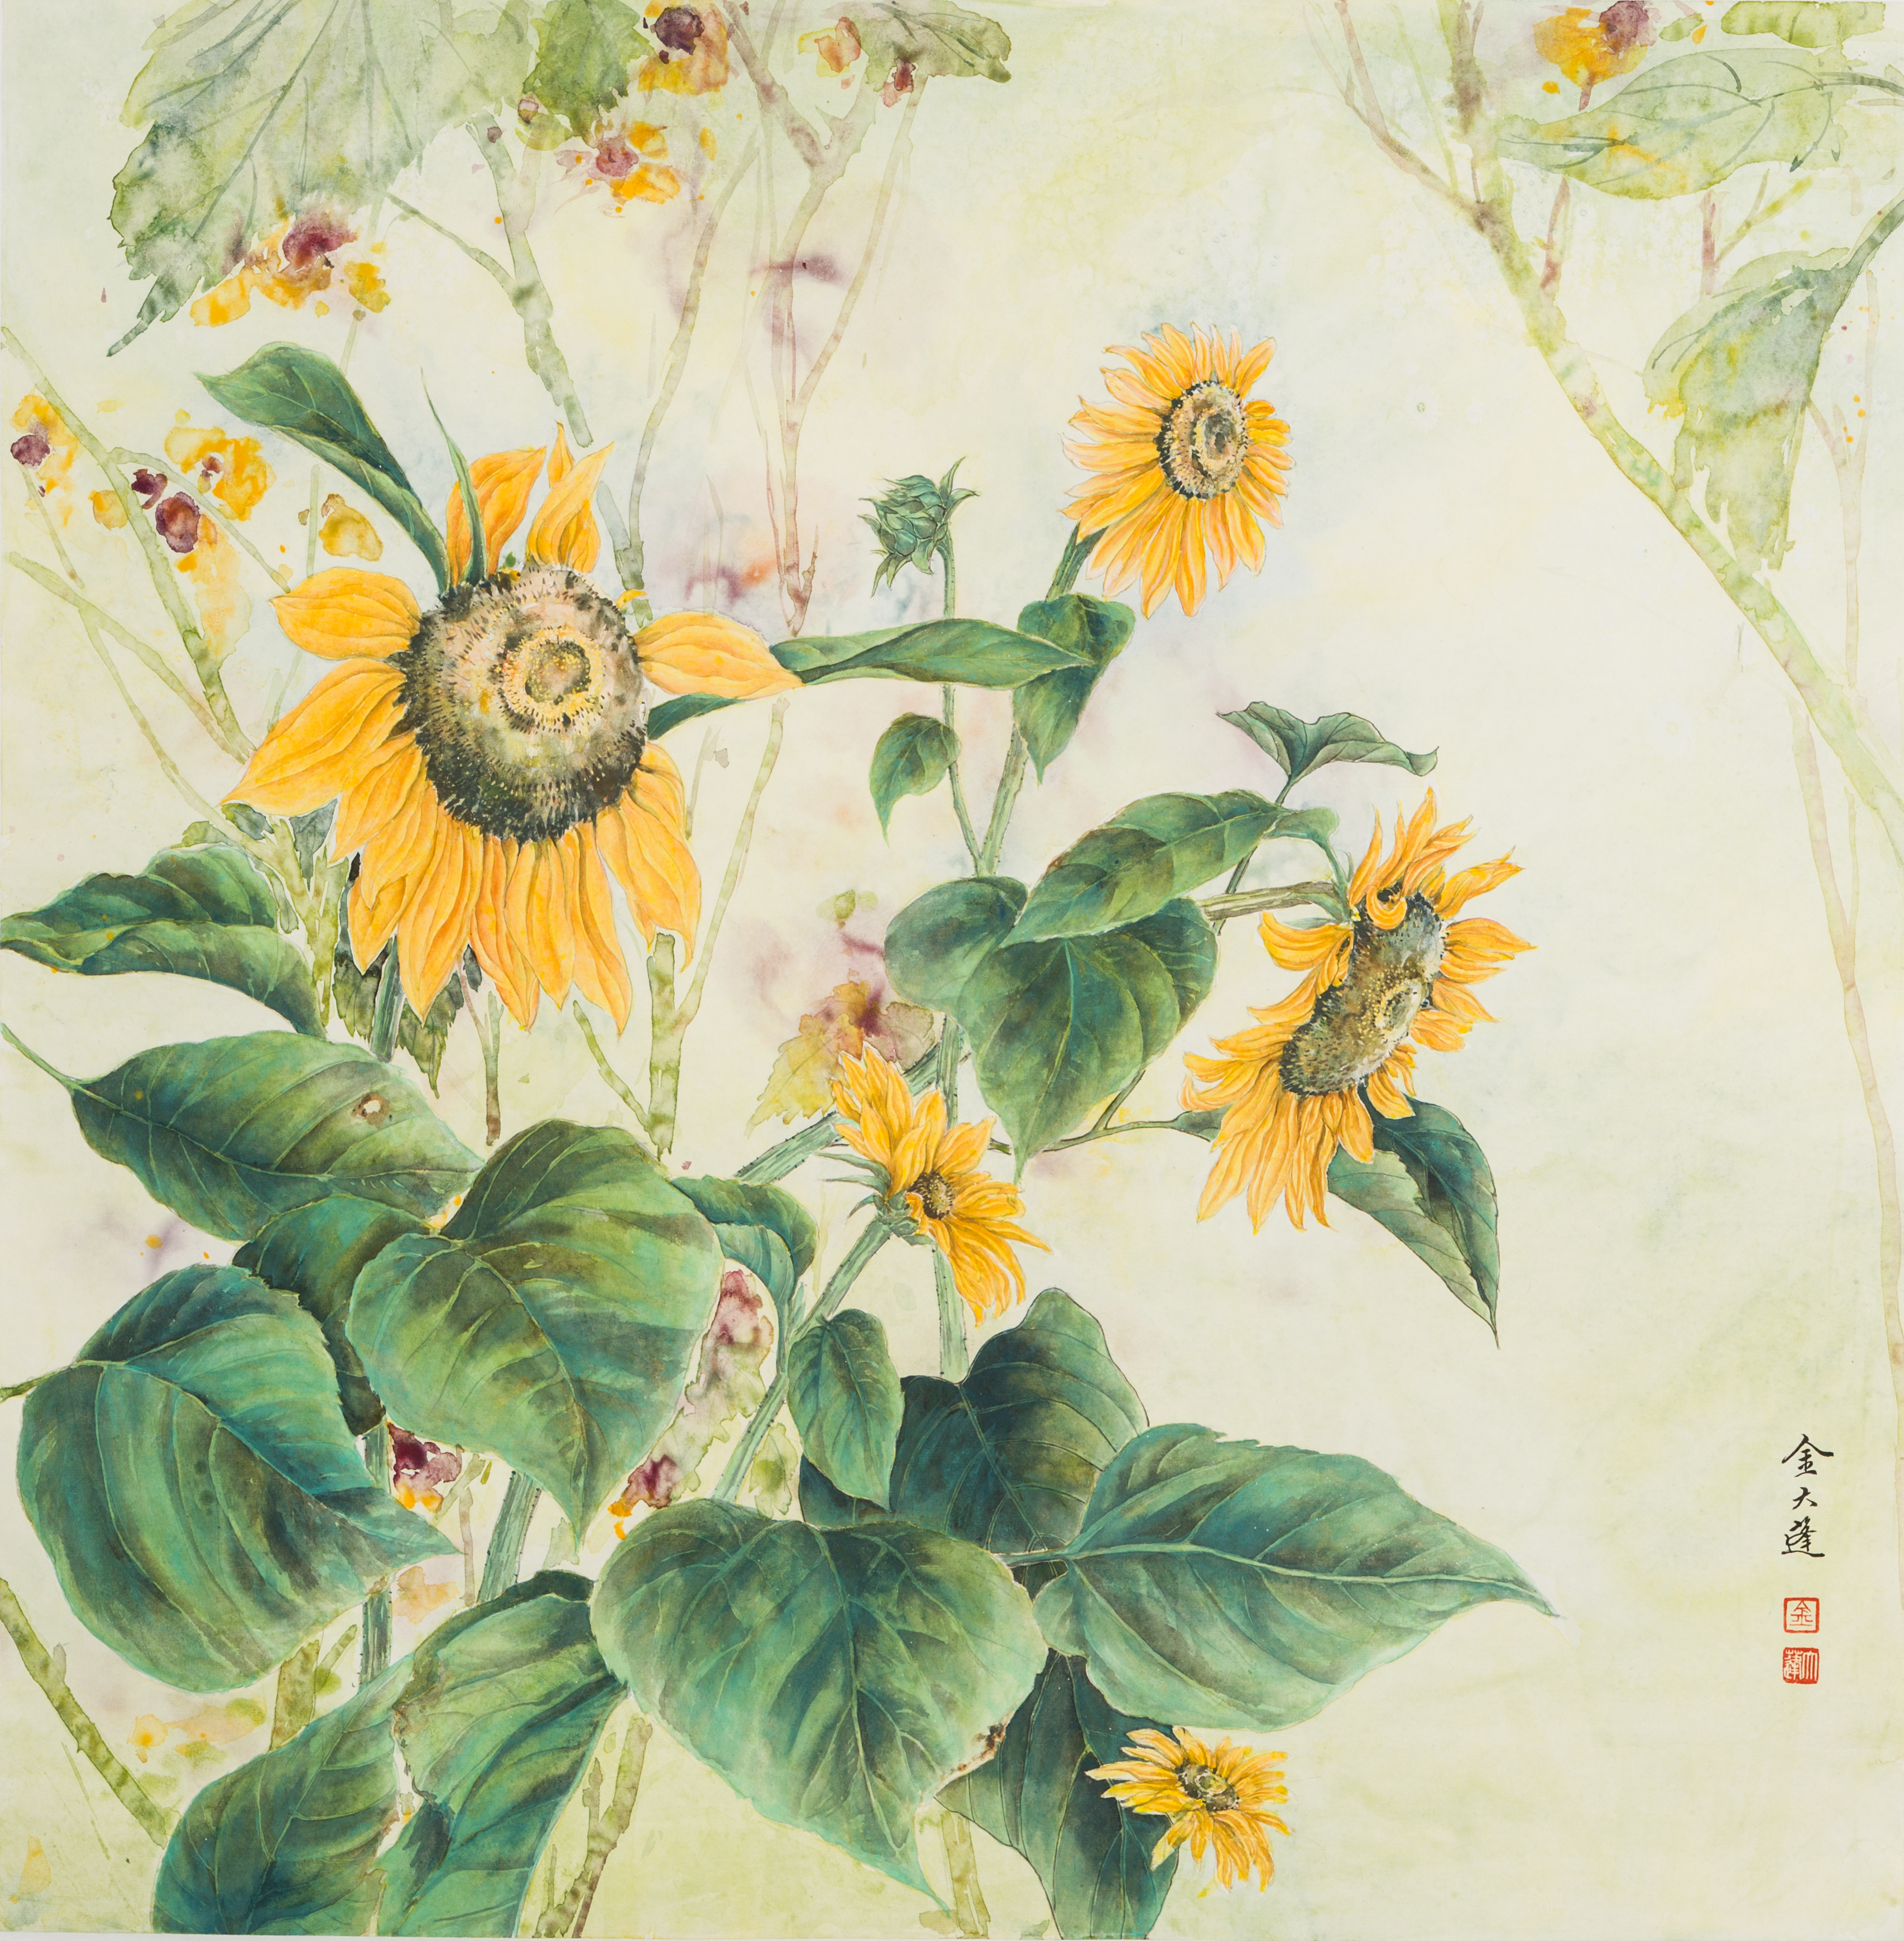 Contemporary Chinese Brush Painting of Sunflowers